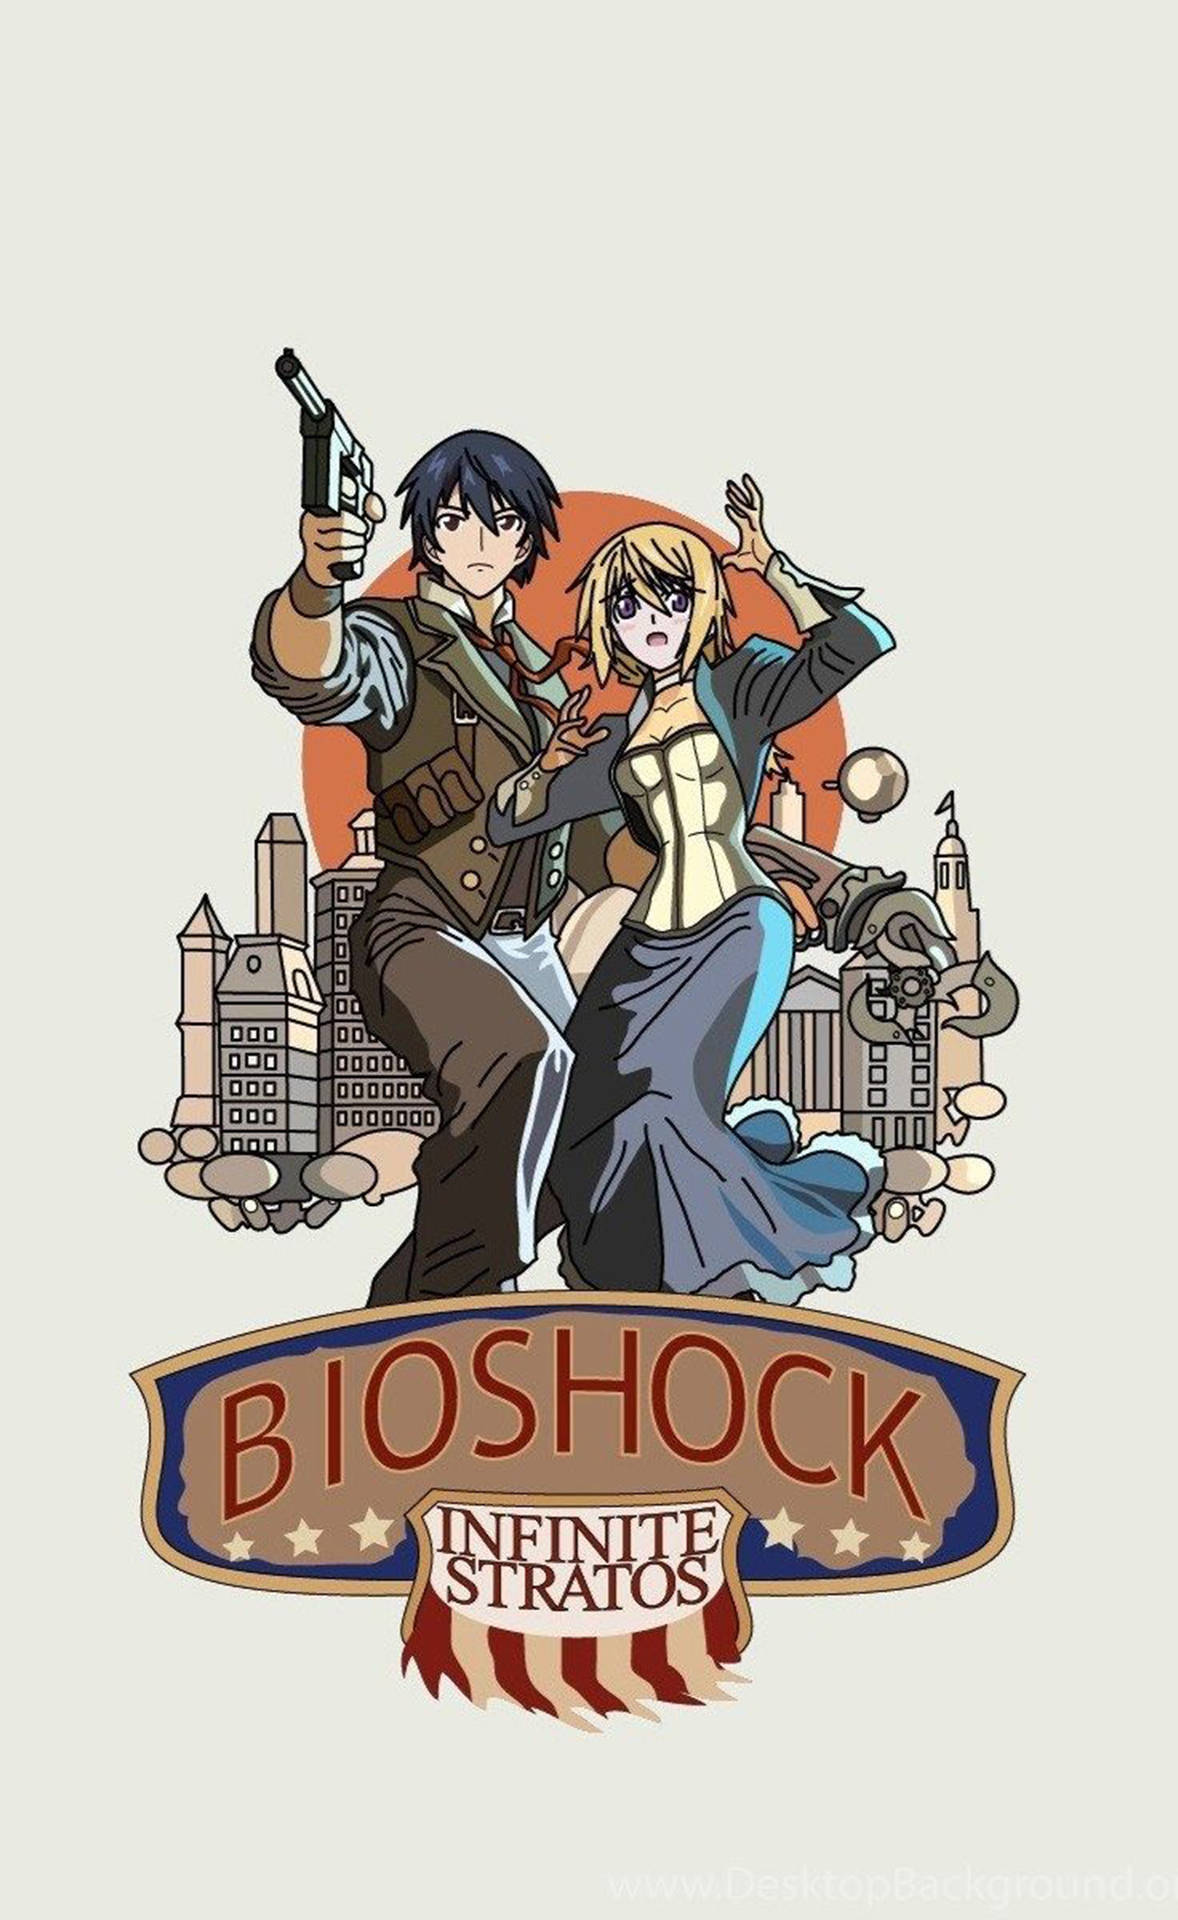 Bioshockinfinite Arte De Dibujos Animados Para Iphone Fondo de pantalla